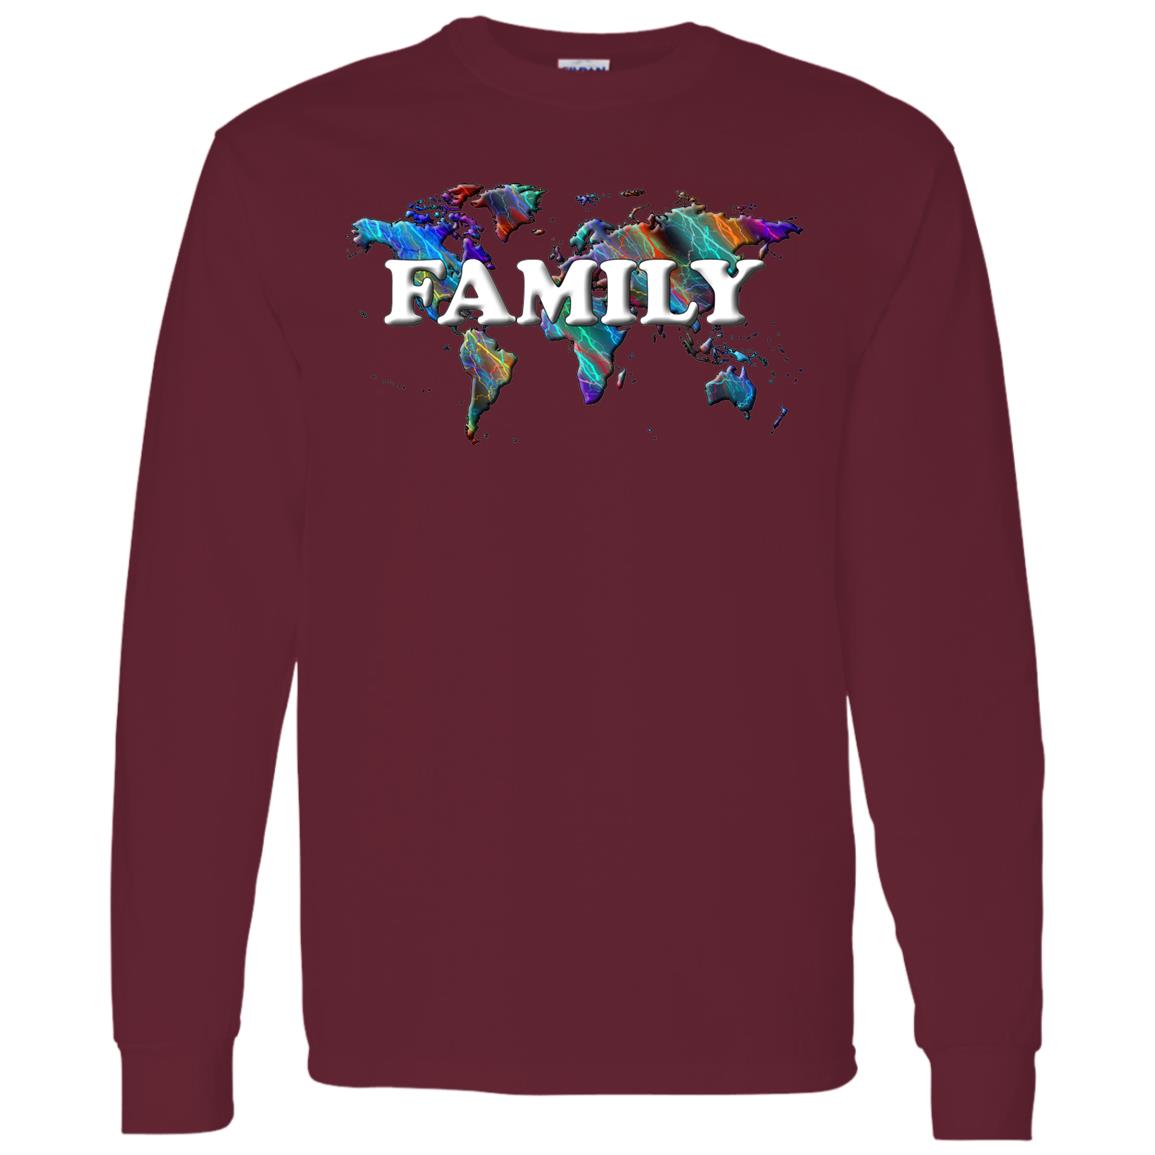 Family Long Sleeve T-Shirt